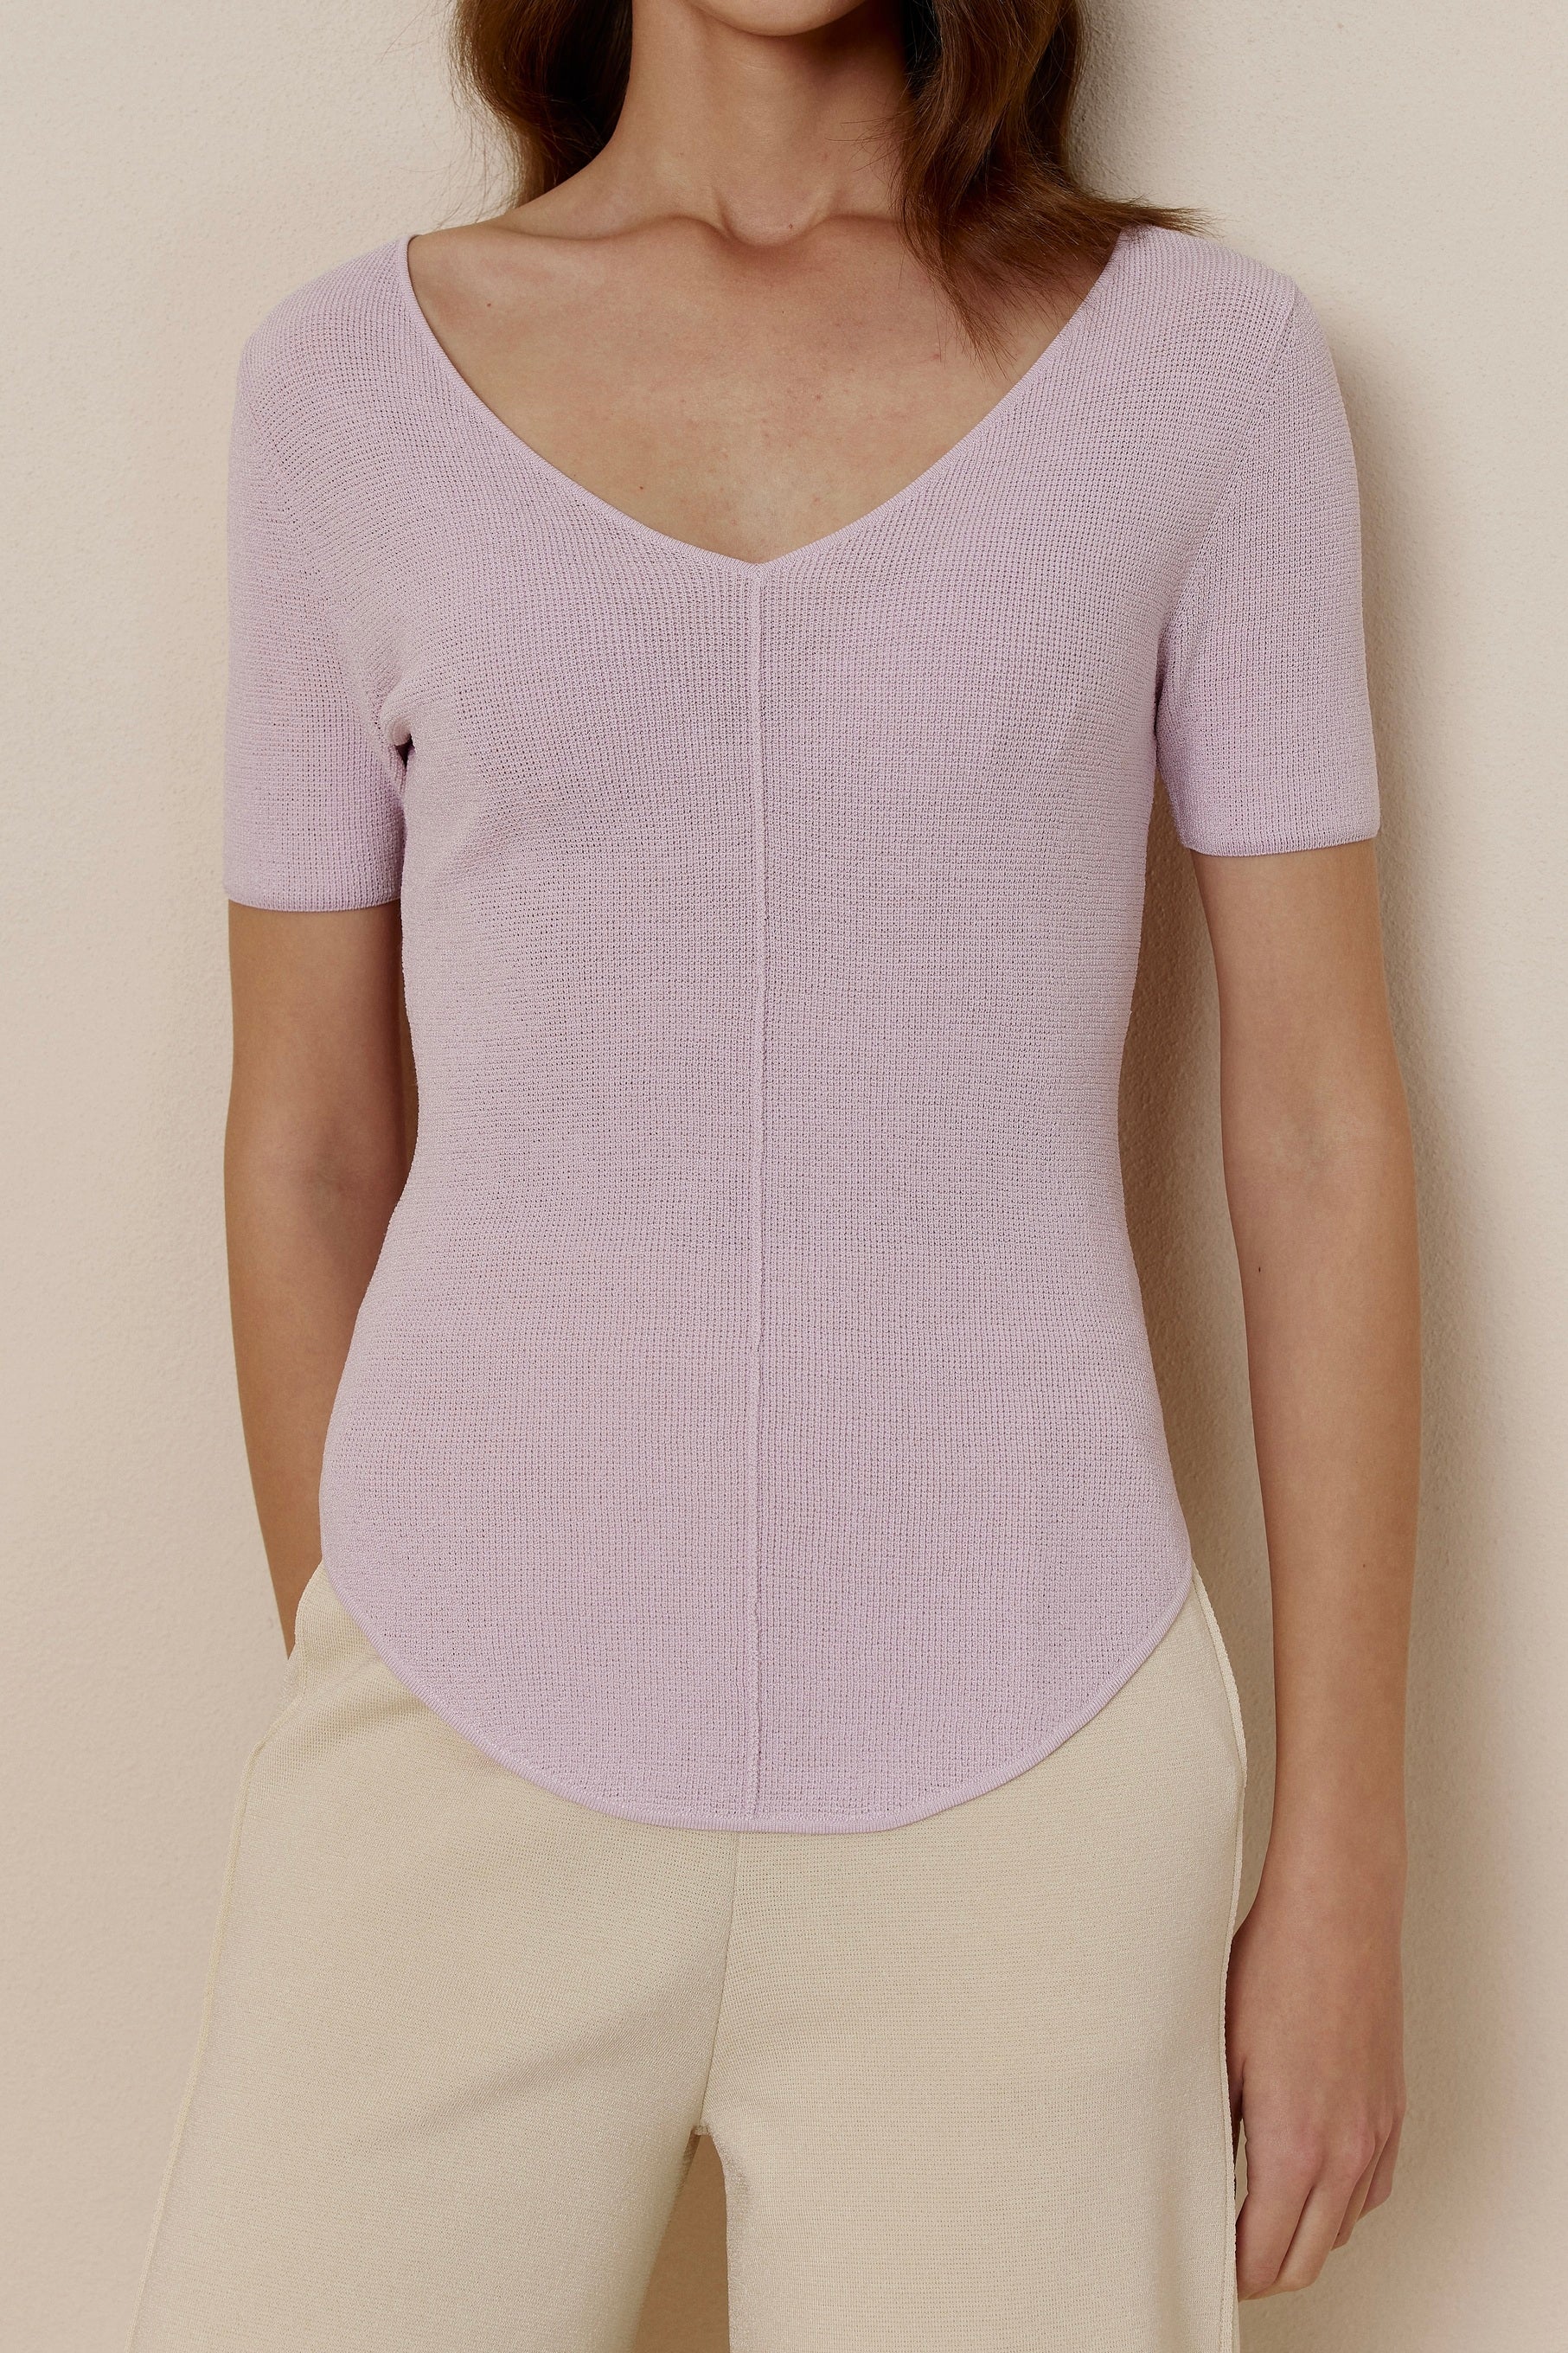 PATTERN HOUR Women's T-Shirt Bodysuit Short Sleeve Mousse Series